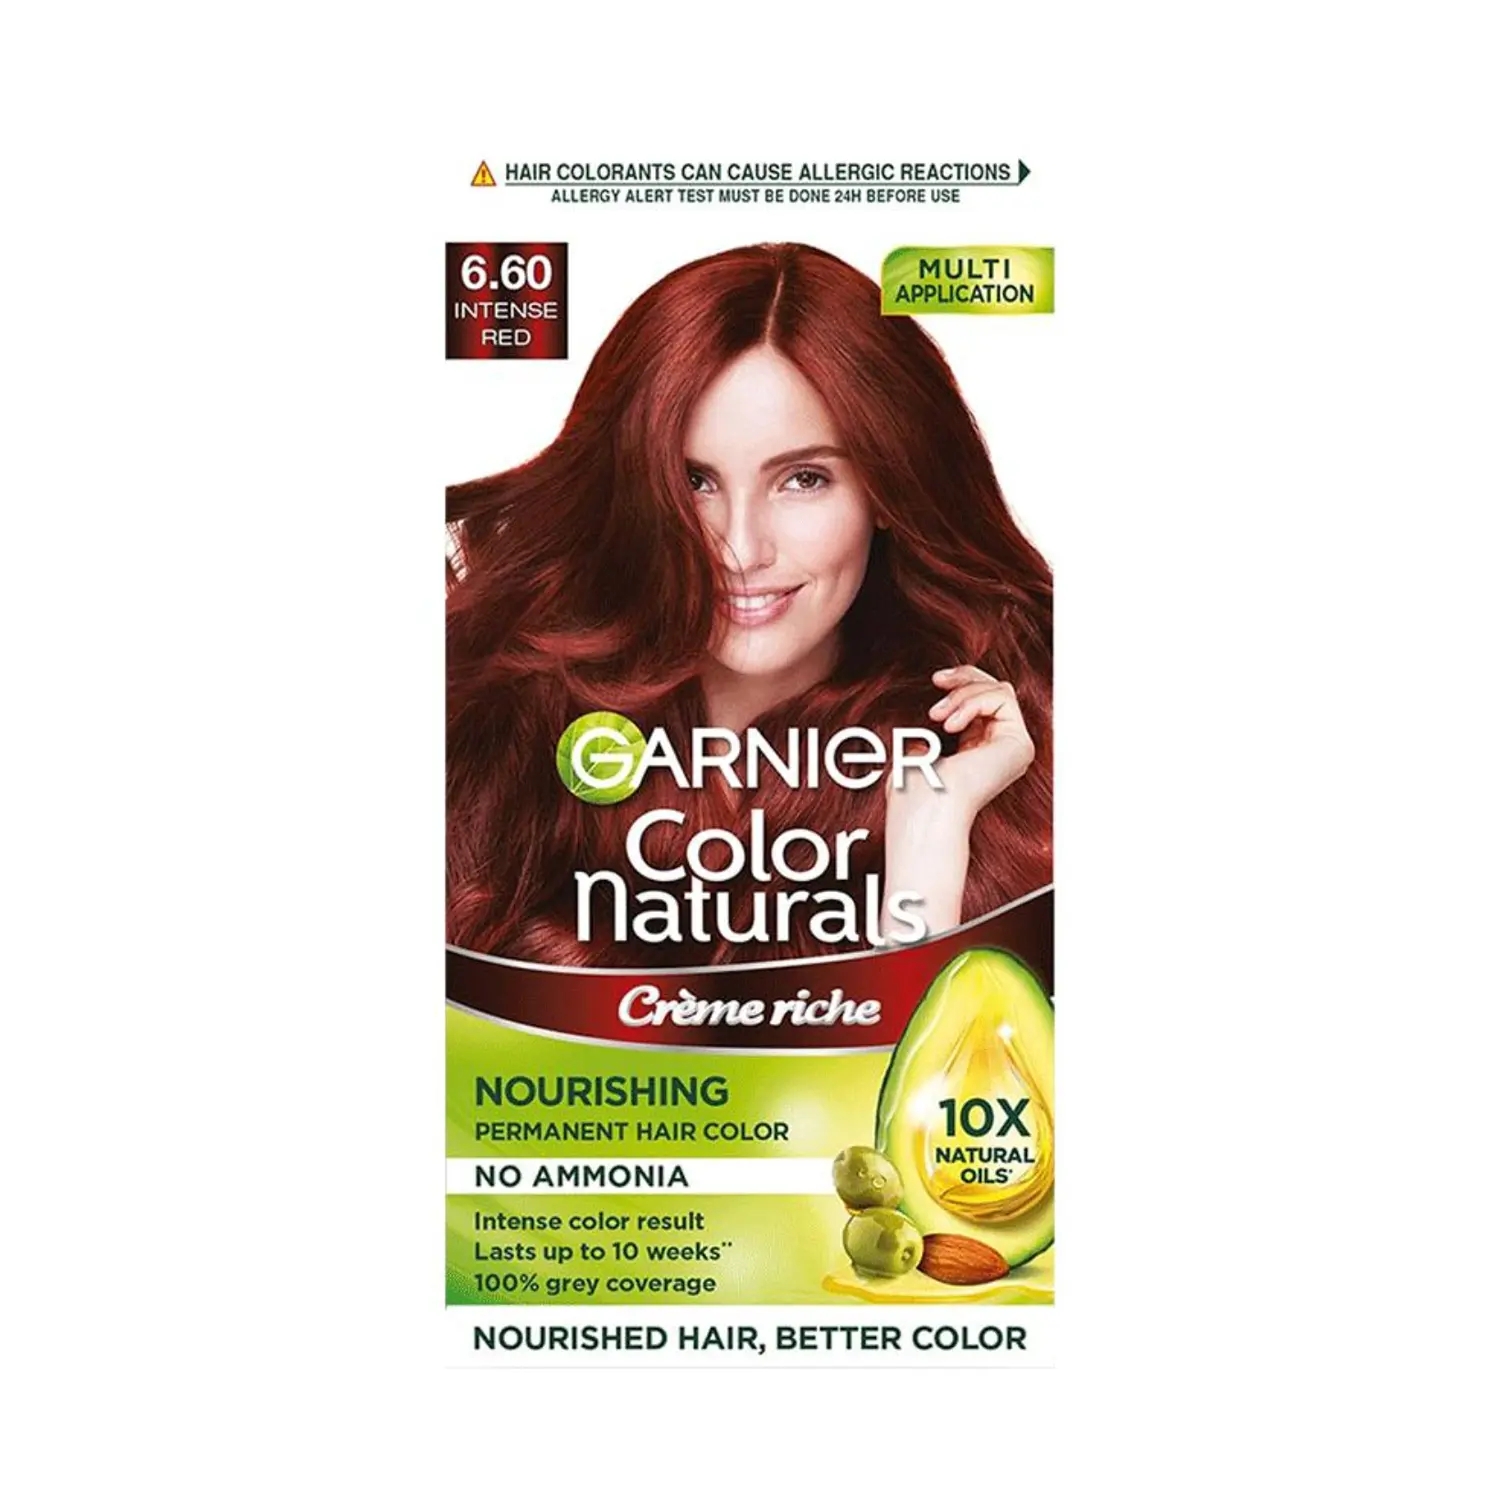 Garnier Naturals Creme Hair 6.60 Intense Red (70ml+60g)